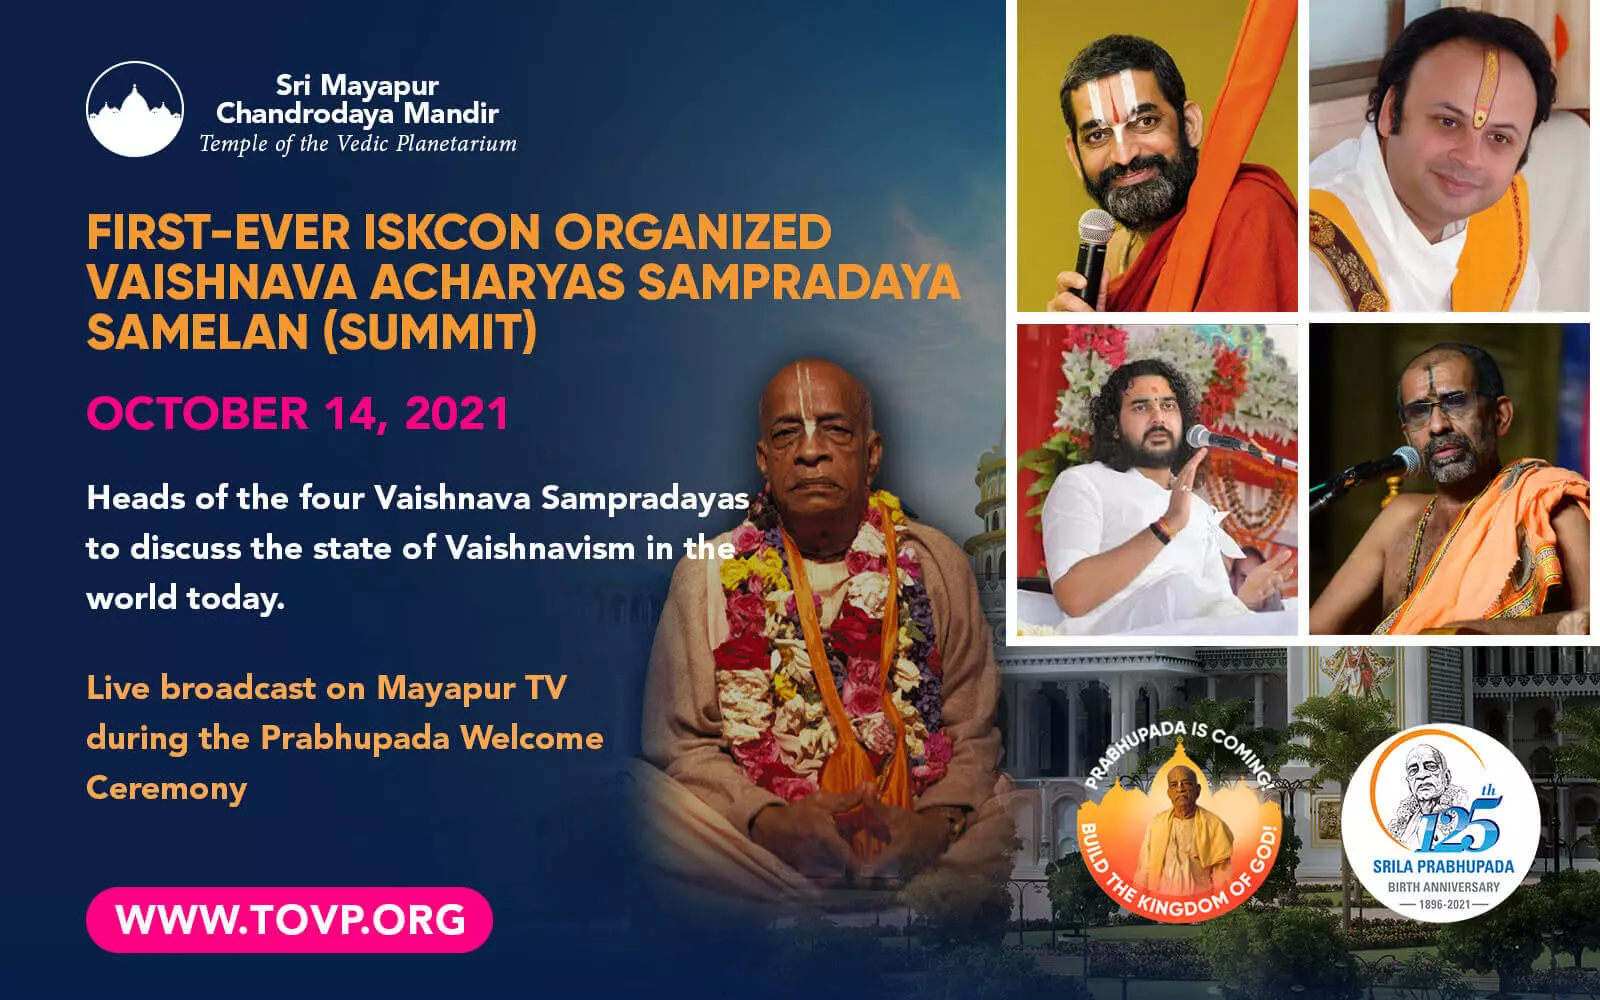 Vaishnava Acharyas Sampradaya Samelan organizzato dall'ISKCON per la prima volta - 14 ottobre 2021